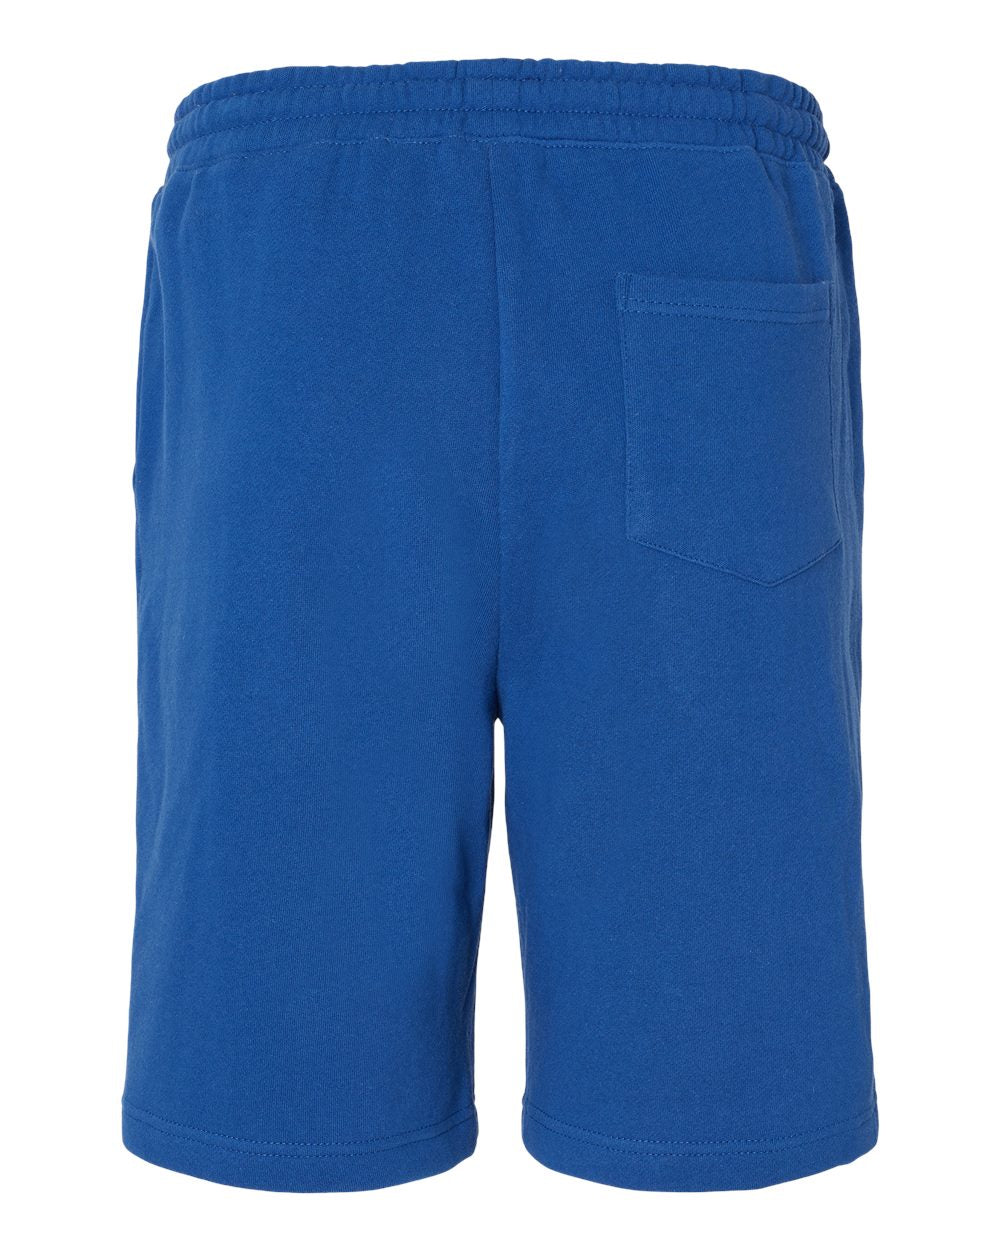 SOULSKY Men's Midweight Fleece Shorts (Royal Blue)